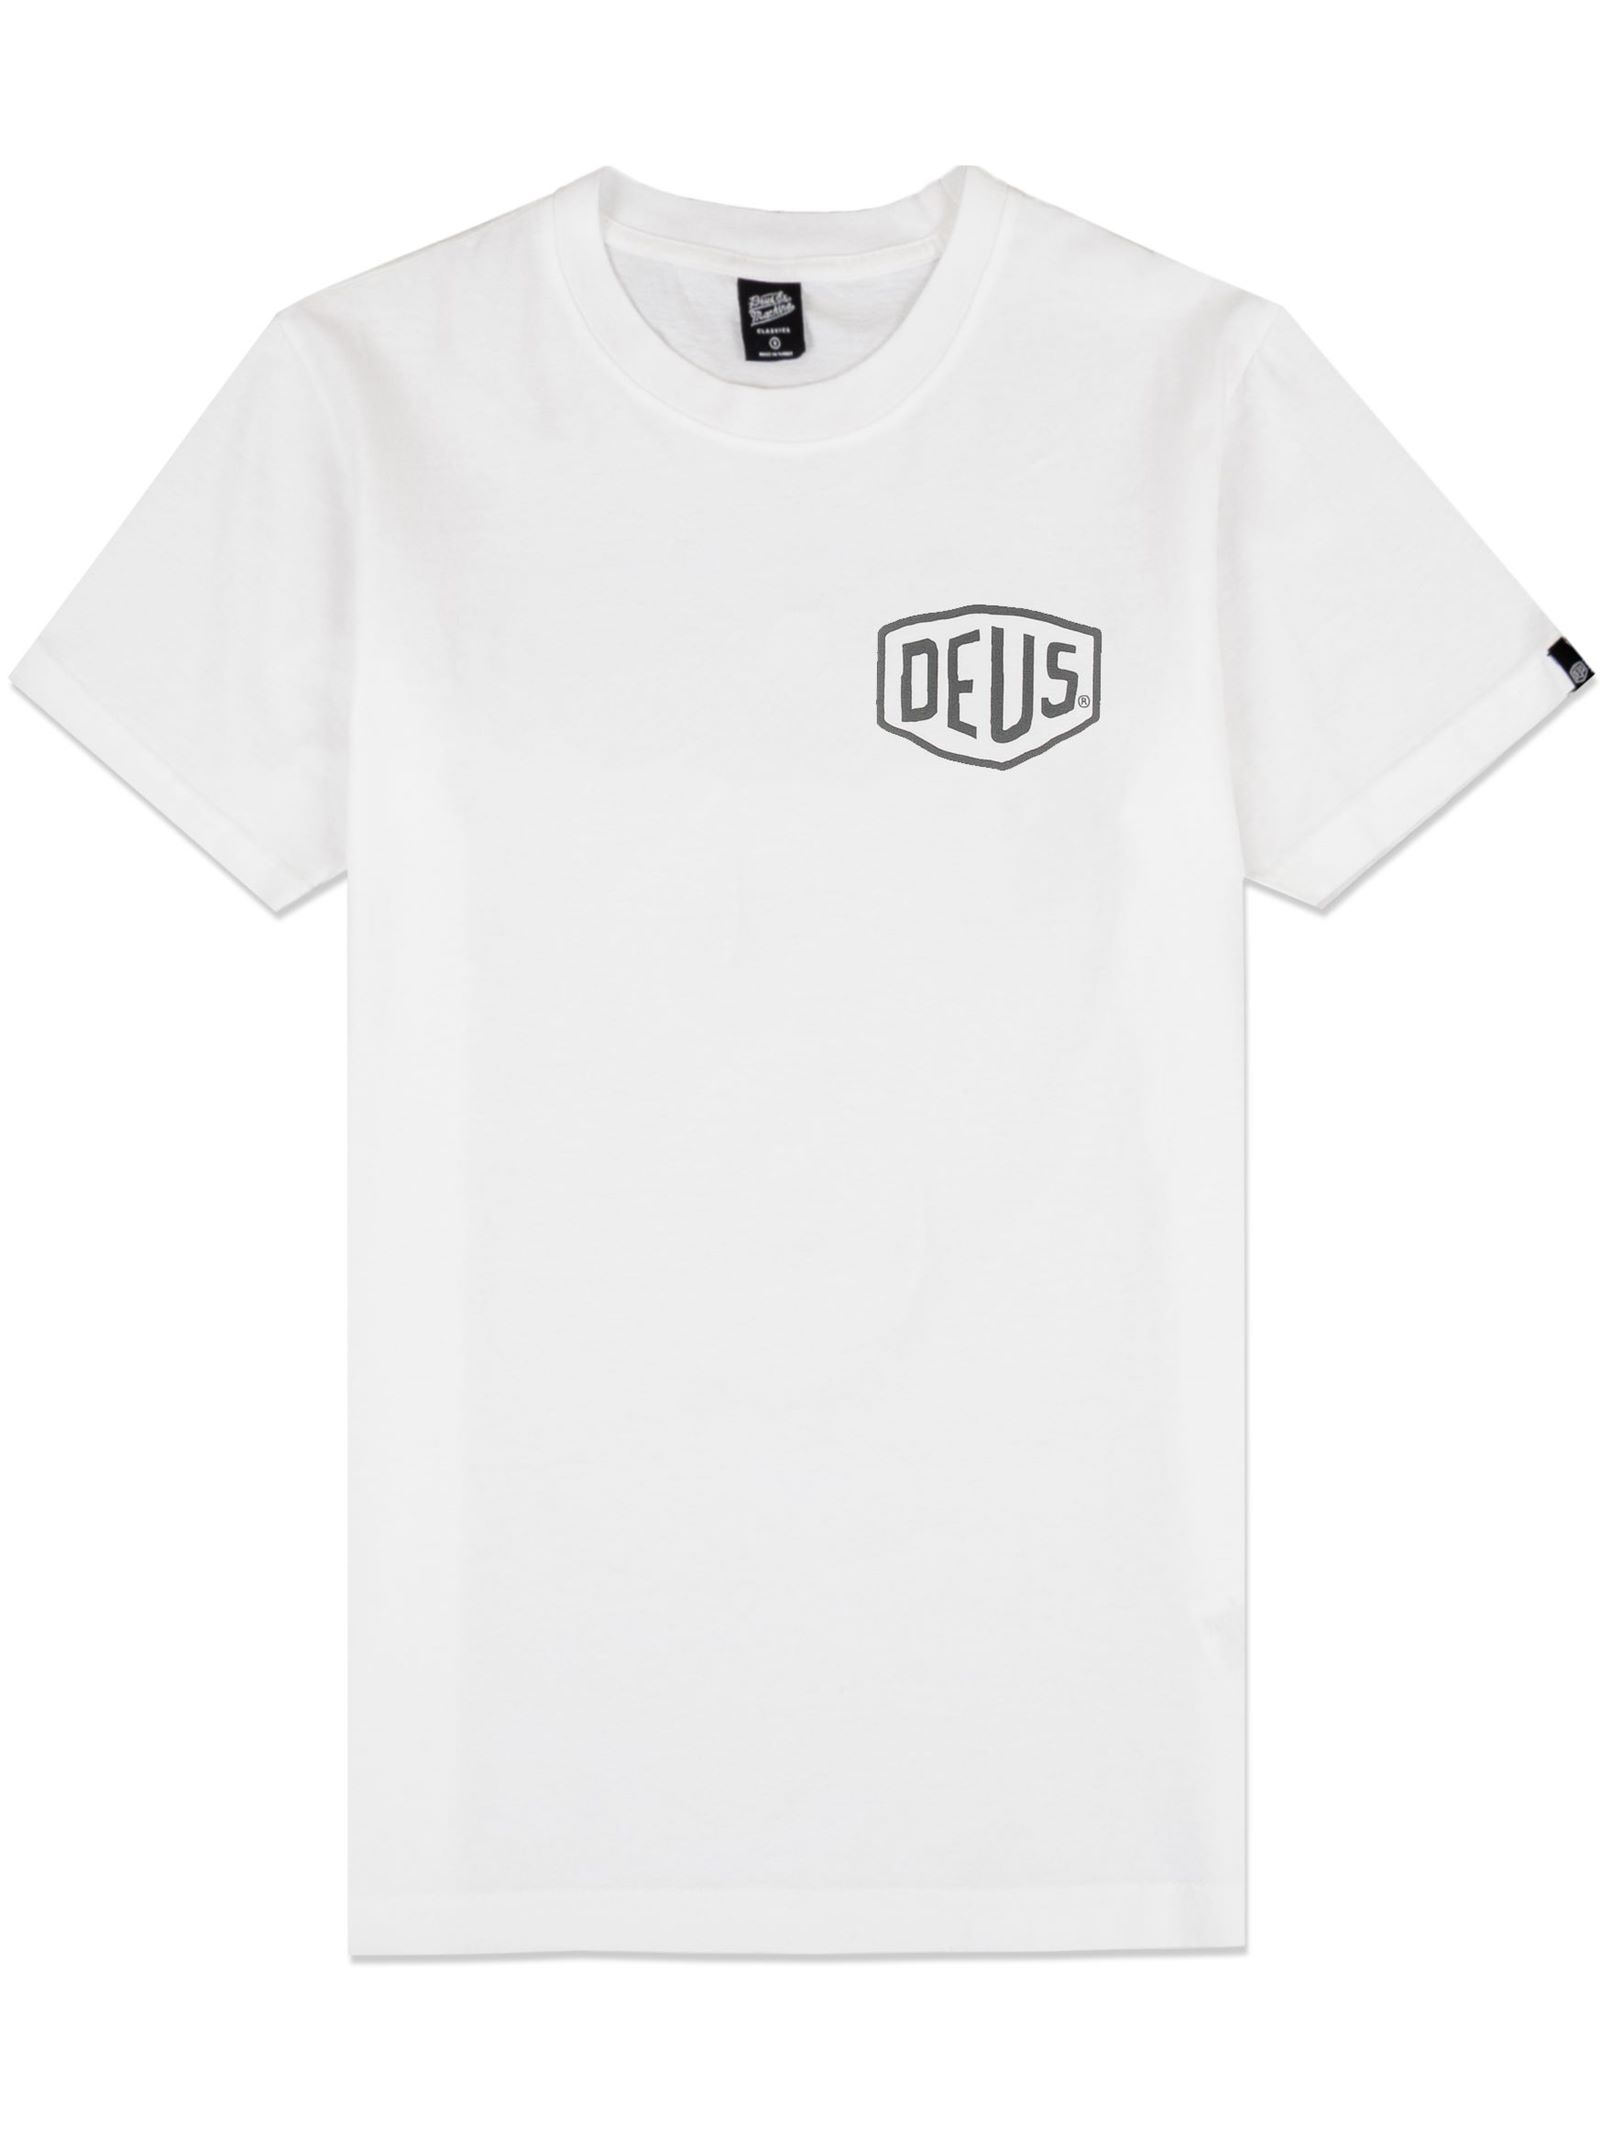 Deus Ex Machina Venice T-Shirt in White | Dapper Street